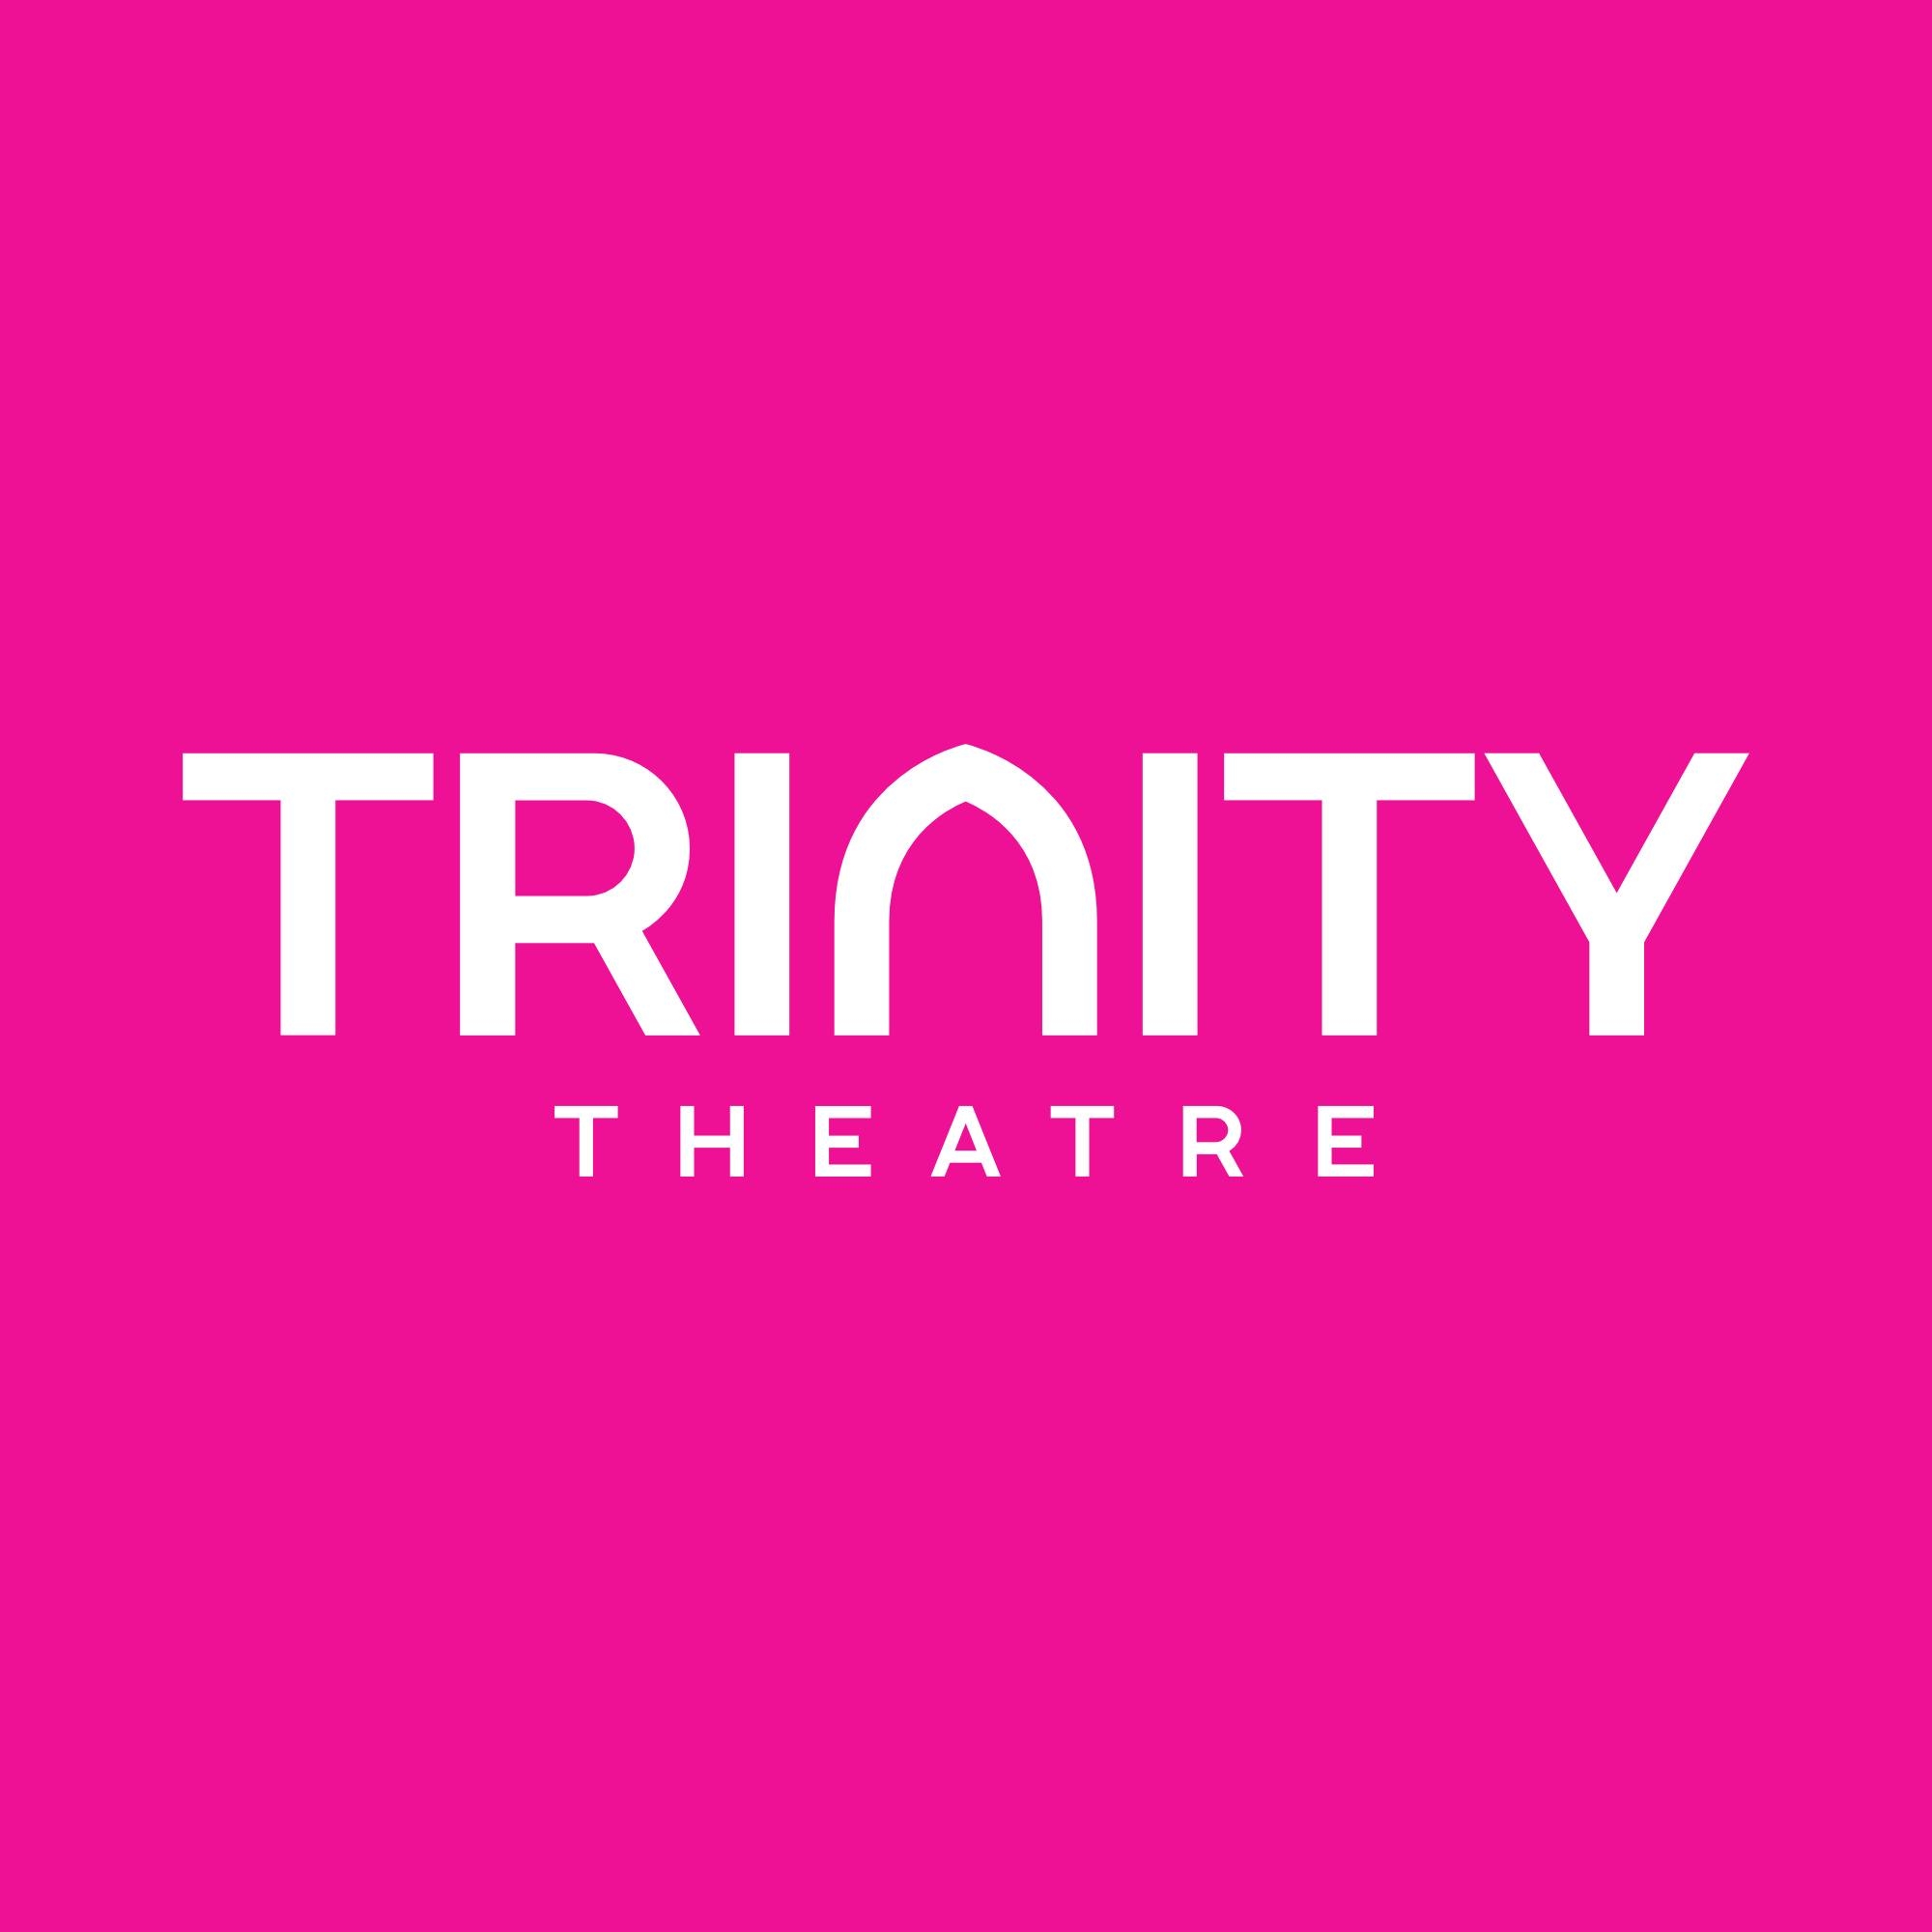 TRINITY THEATRE logo